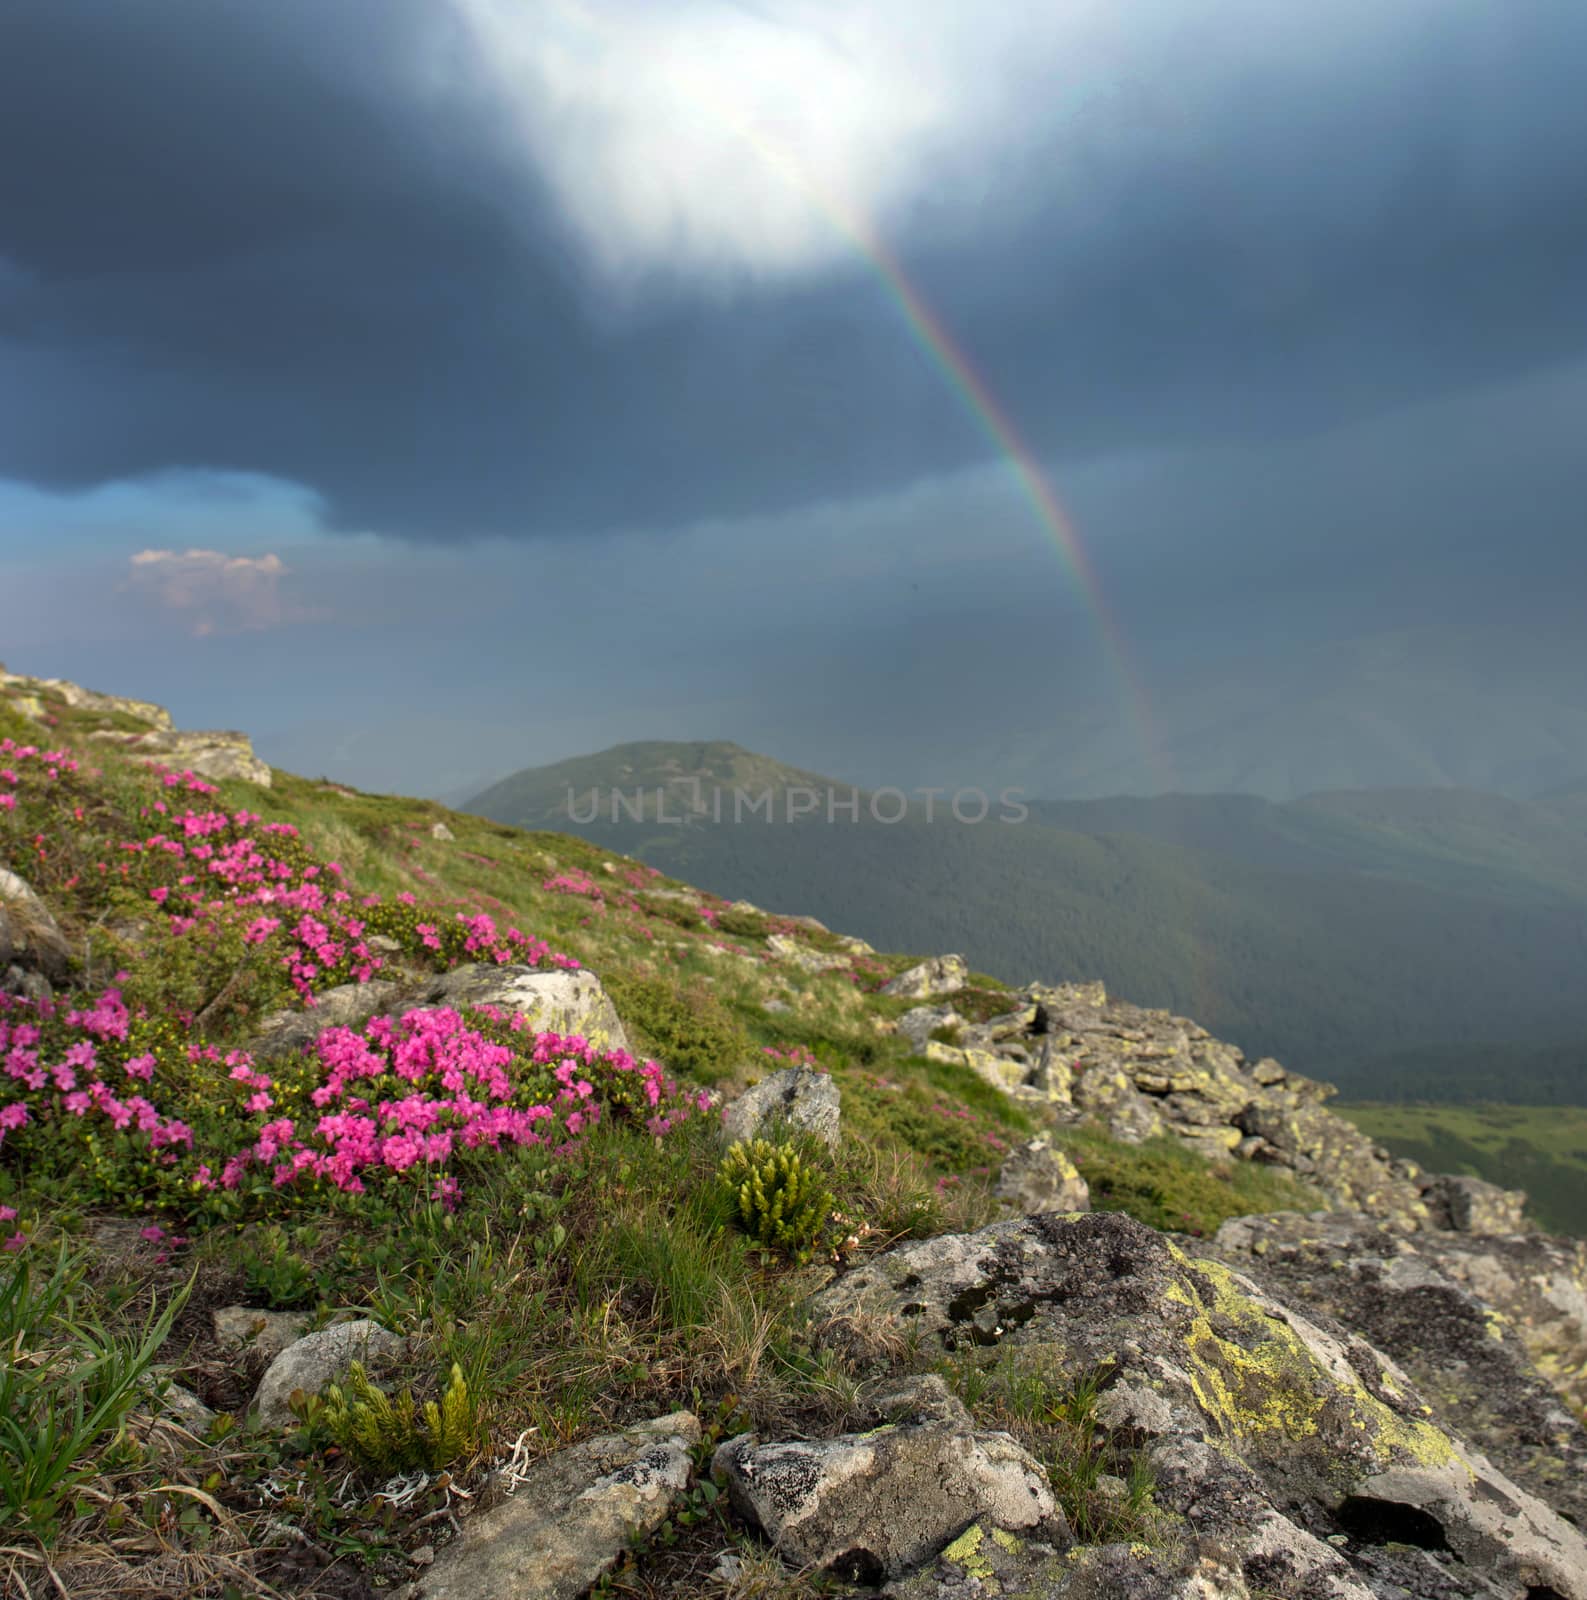 evening mountain plateau landscape with rainbow(Carpathian, Ukra by dolnikow